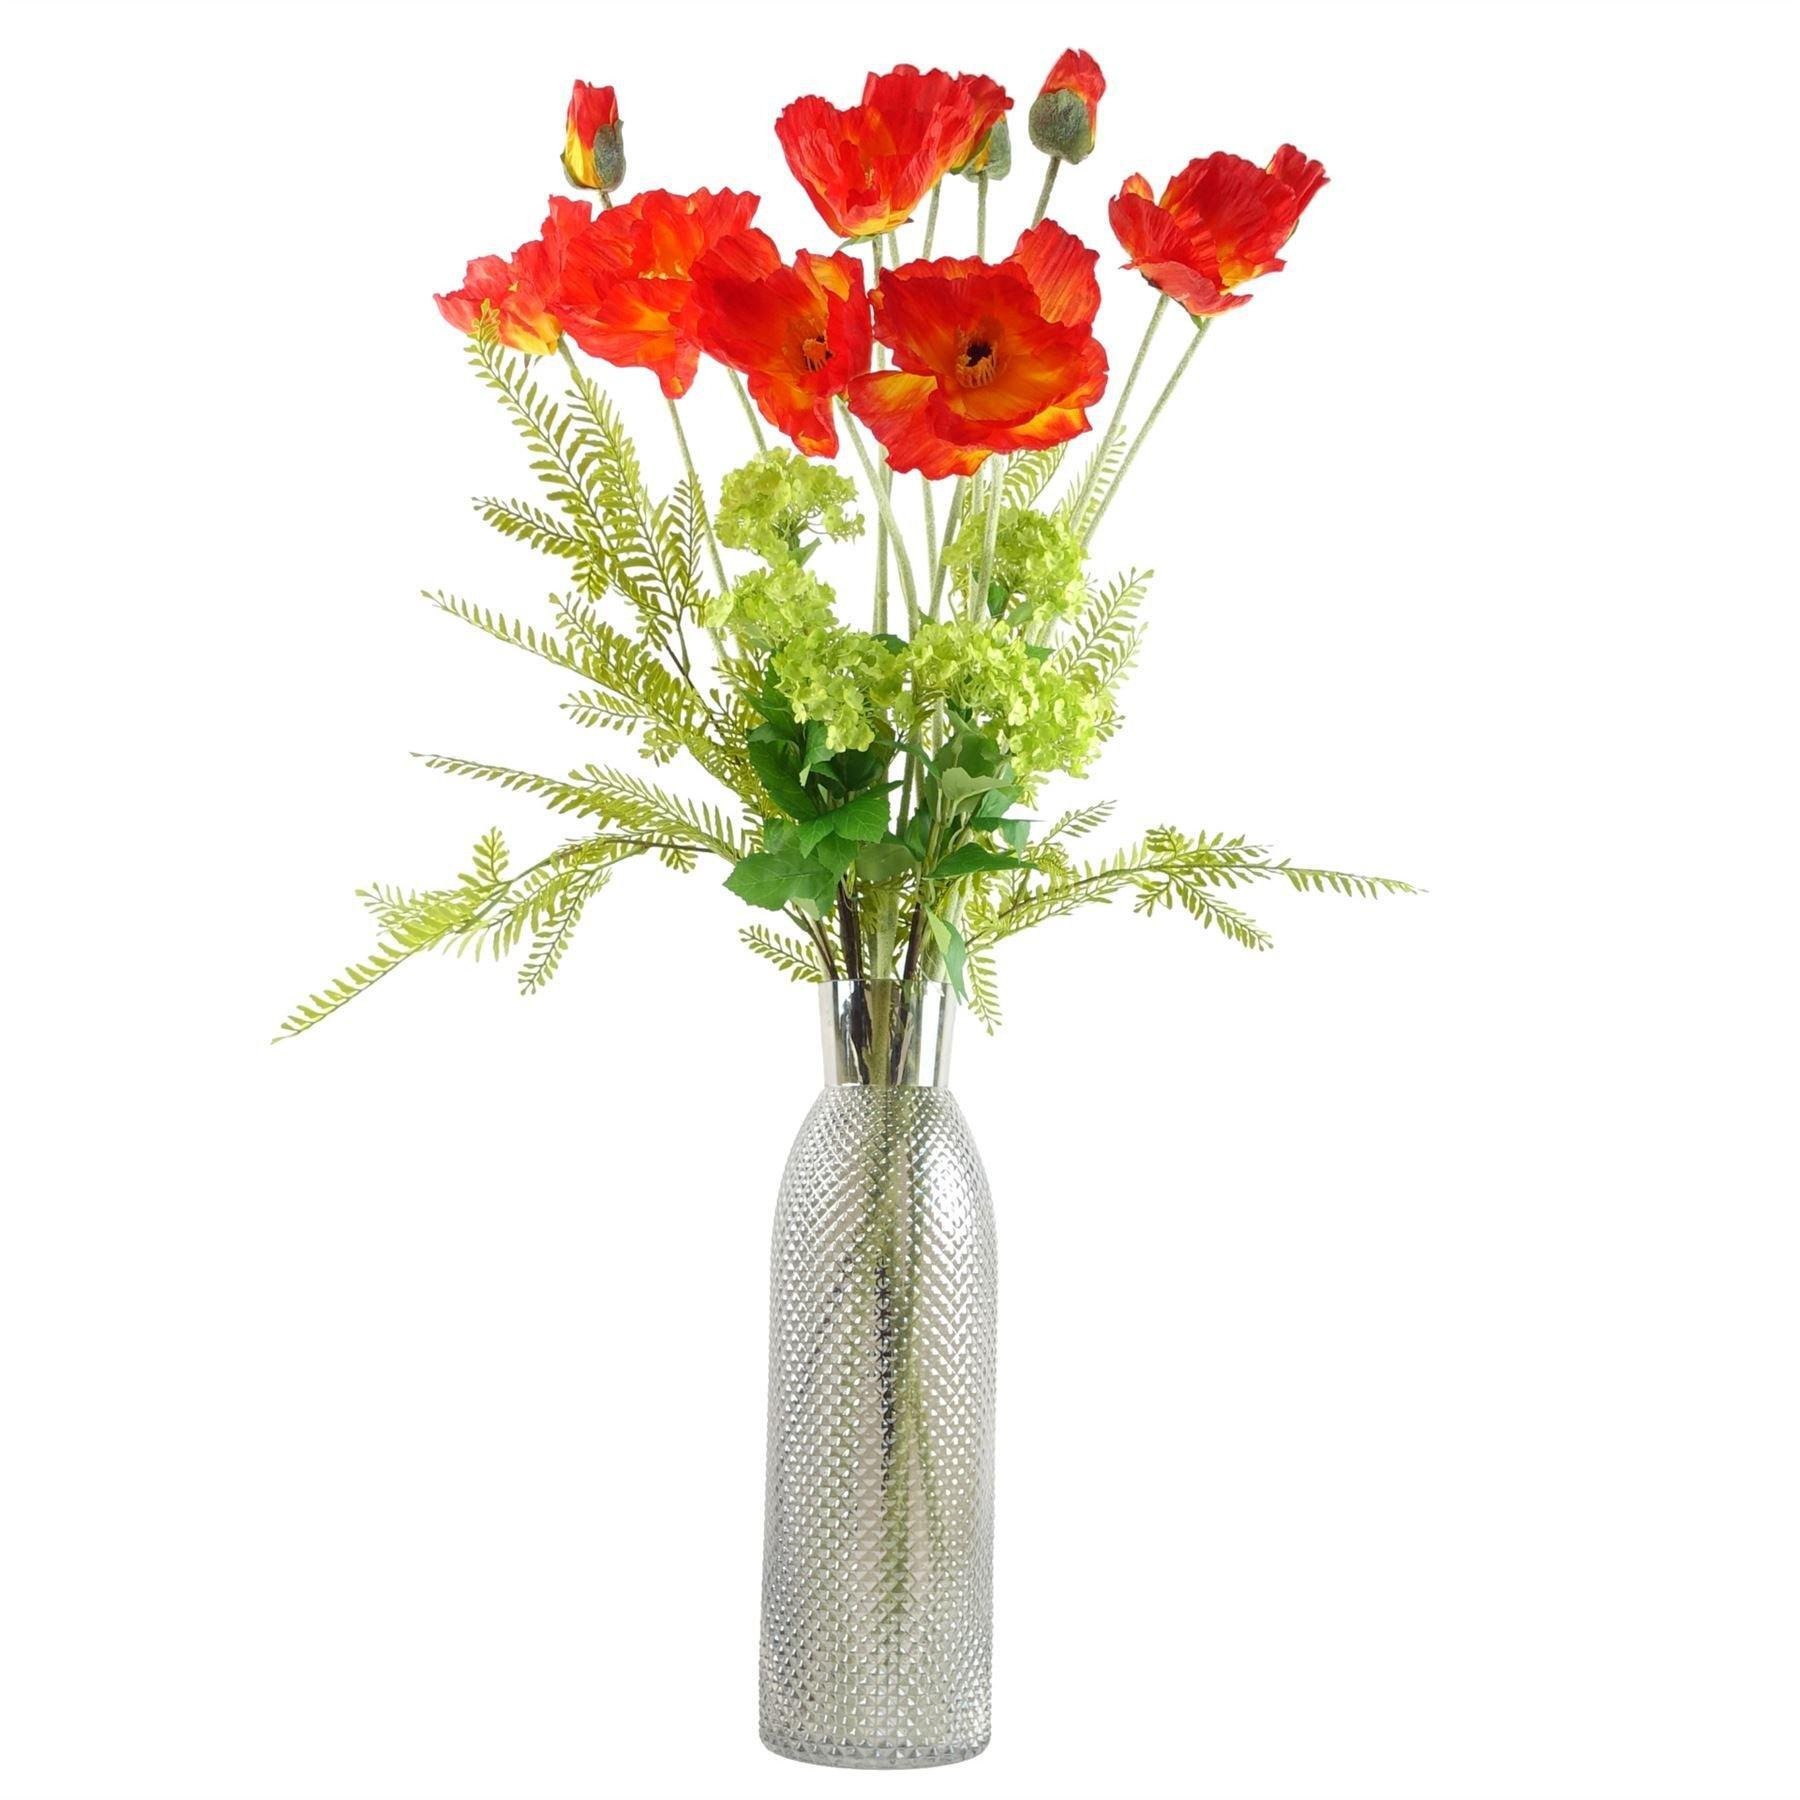 Leaf 100cm Red Poppy and Fern Glass Vase - image 1